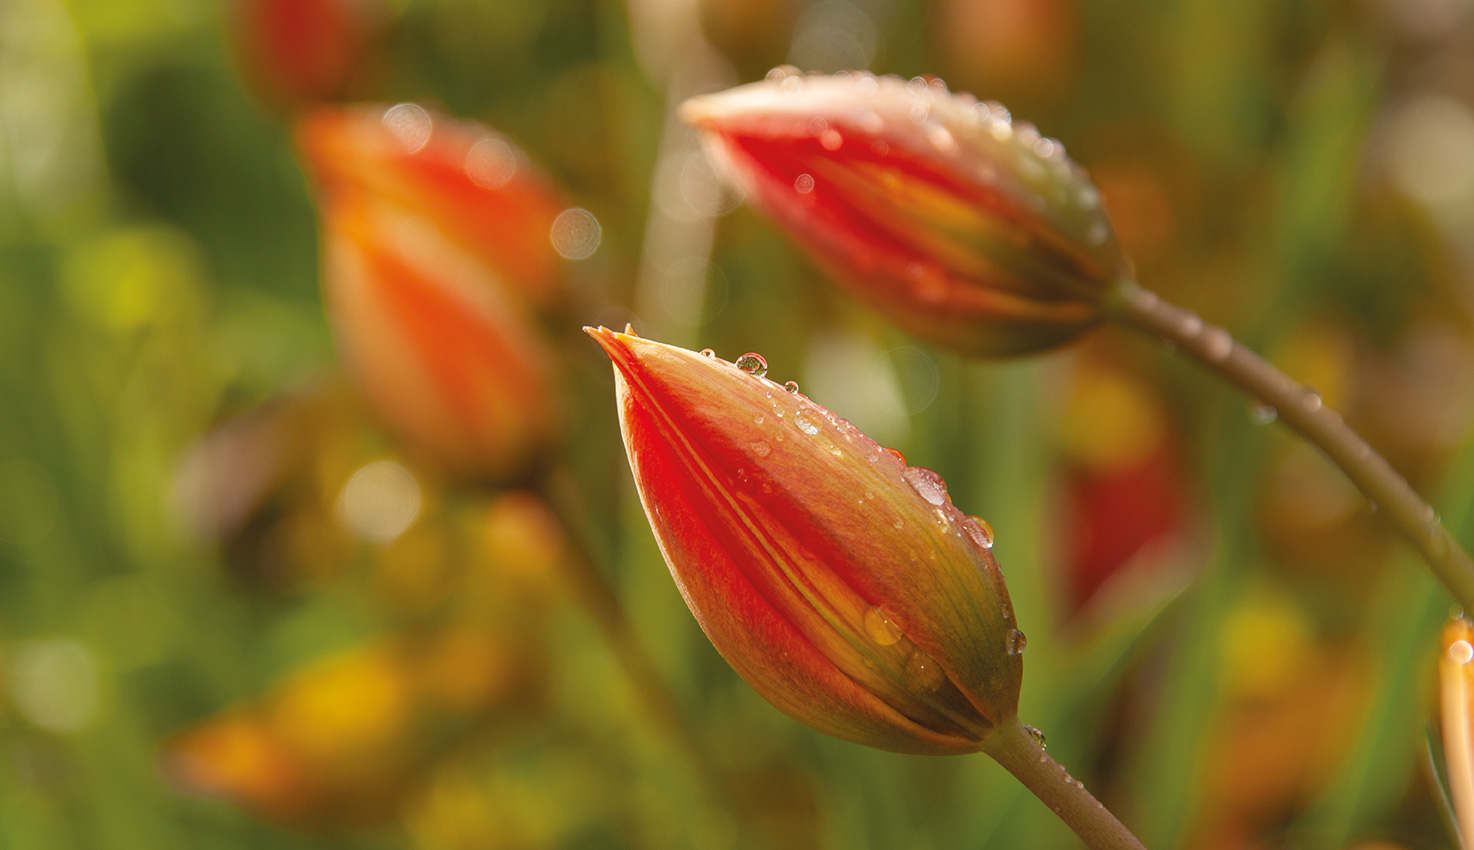 tulipa-whittallii-bijzondere-tulp-oranje-tulp-tulpenbollen-hovenierscentrum-de-briellaerd-barneveld_8_l_mg_8708